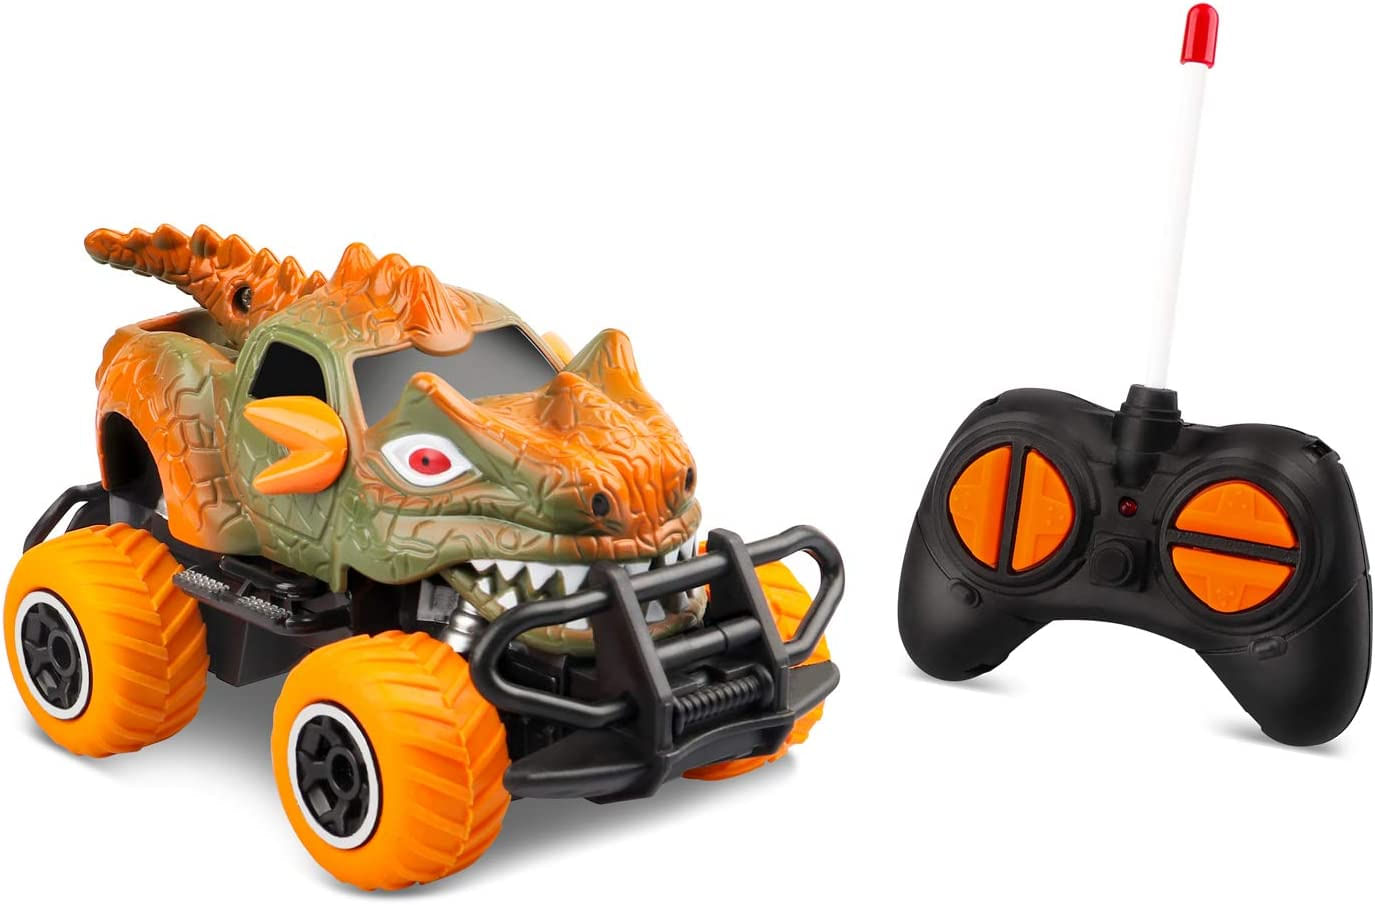 Brinquedos Carro De Controle Remoto De Dinossauro De Menino De 4 A 5 Anos, Mini Carro De Dinossauro Brinquedo Infantil Carro De Corrida Com